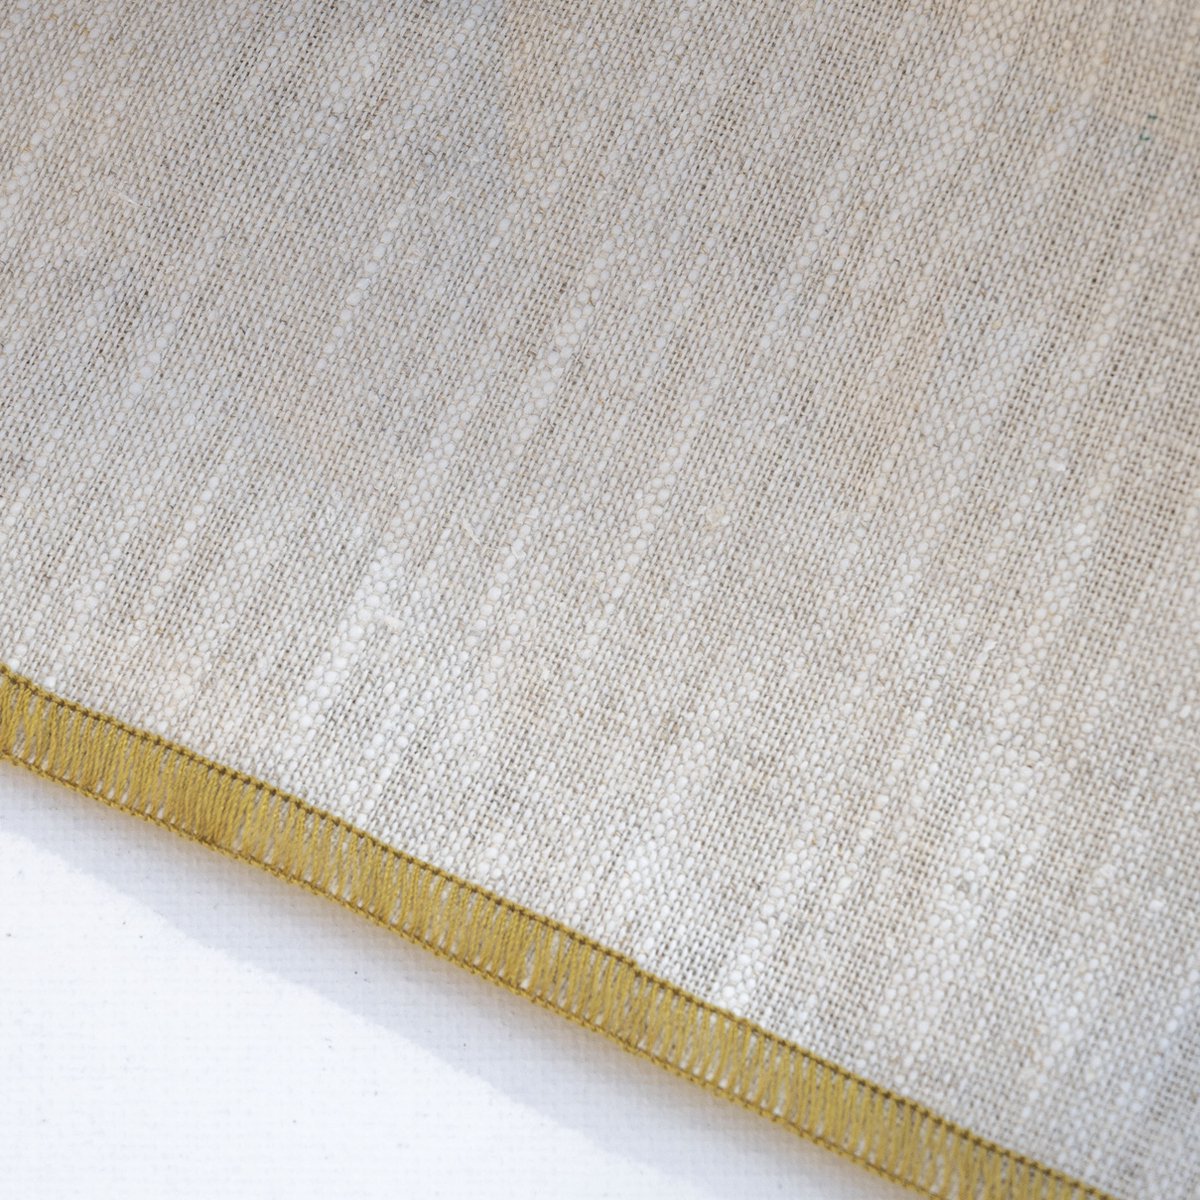 100% gewassen linnen tafelkleed - Naturel met goudgele rand - BliekTofTafelen - 140x350 cm